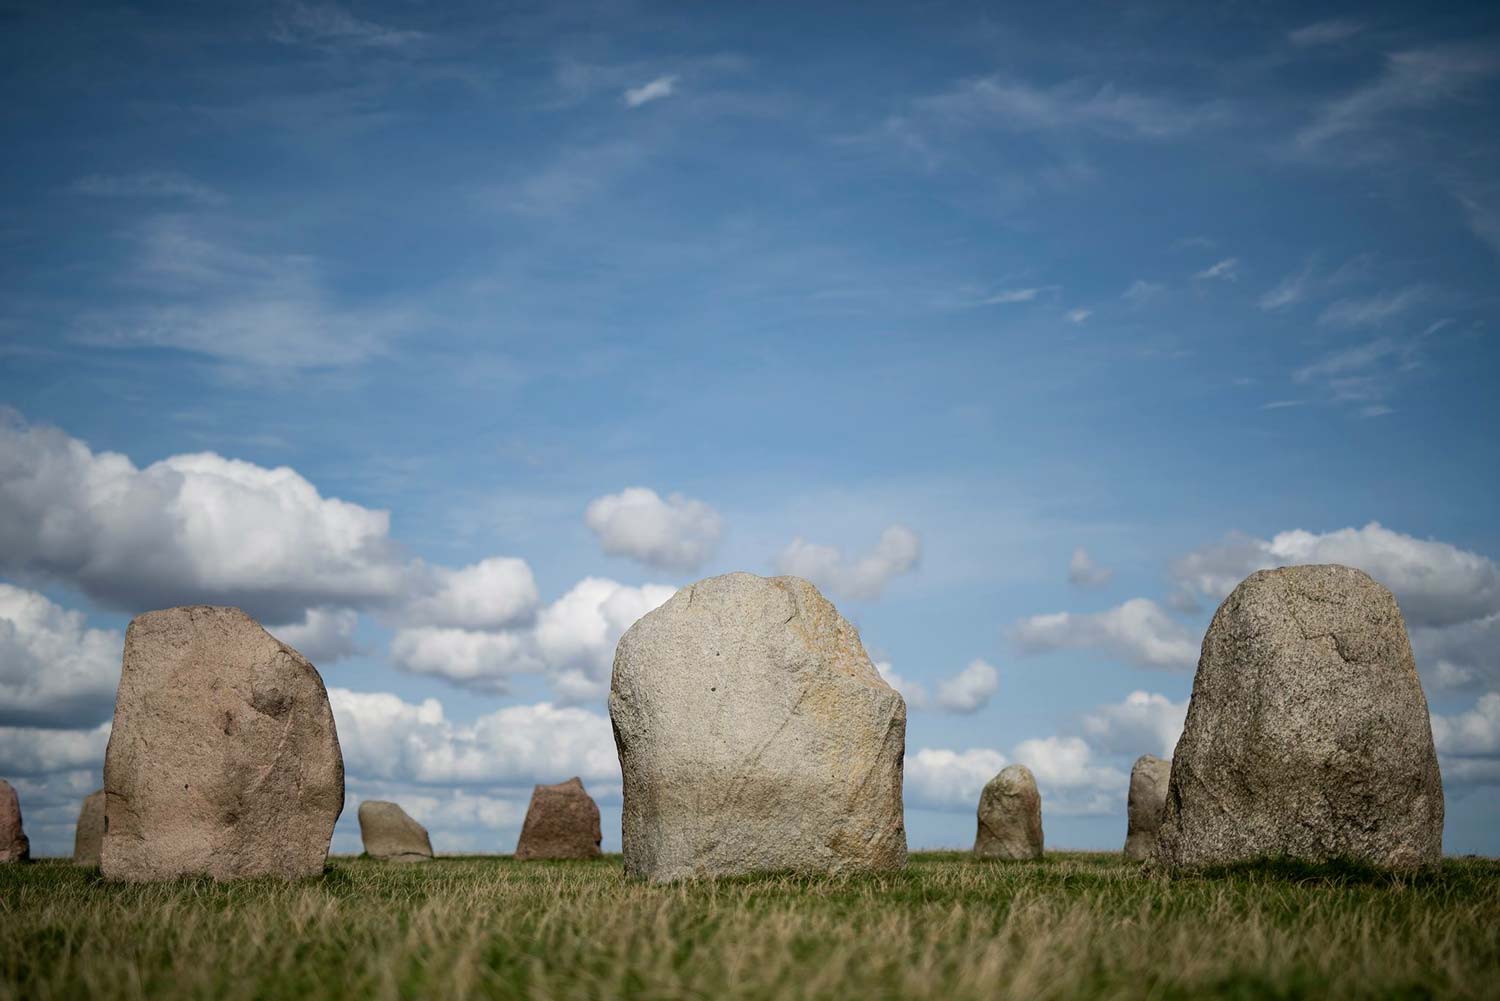 Ale’s Stones, Kåseberga, Sweden